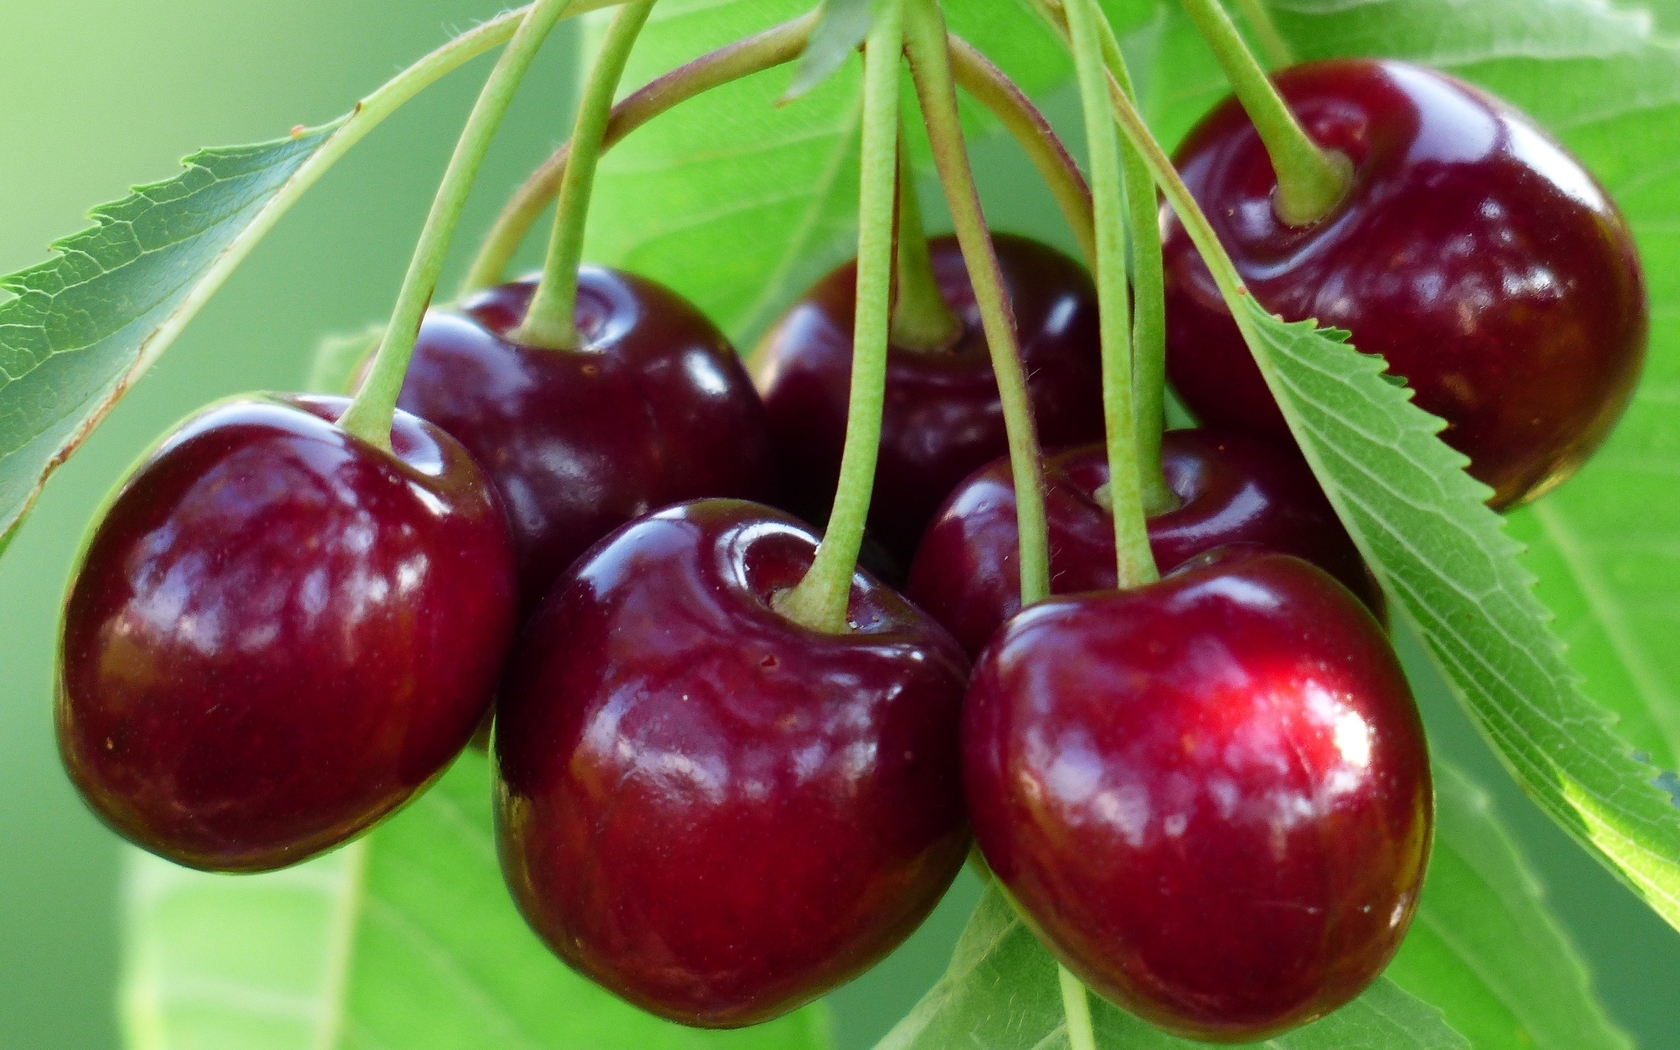 Image: Cherry, berry, branch, ripe